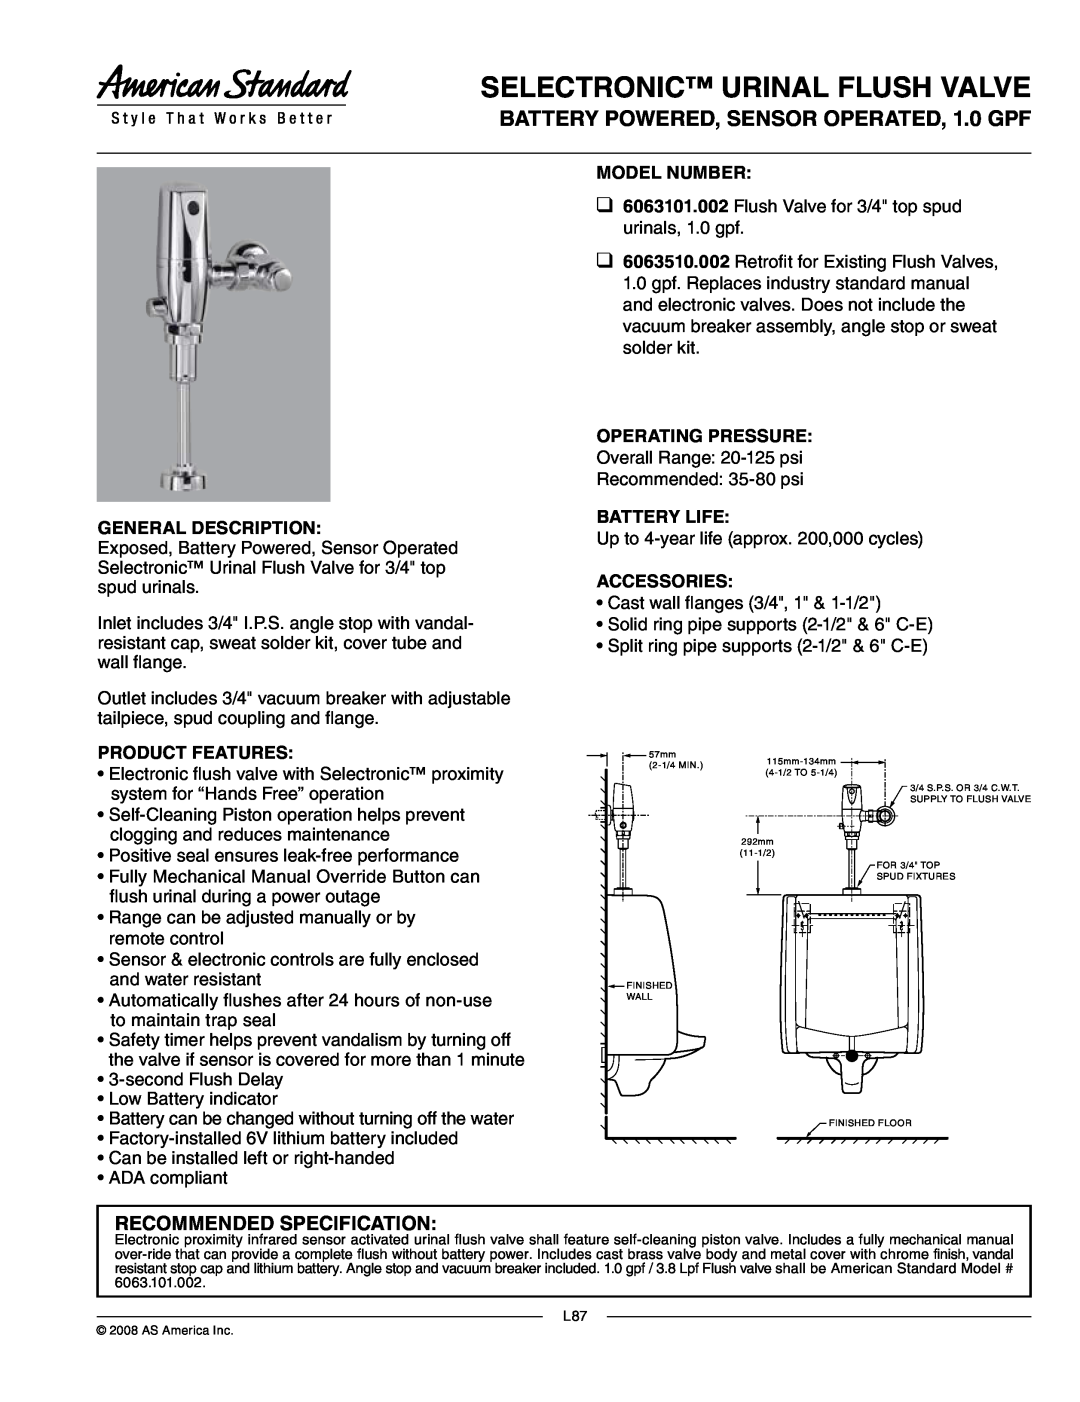 American Standard 6063101.002 manual Selectronic Urinal Flush Valve, BATTERY POWERED, SENSOR OPERATED, 1.0 GPF 